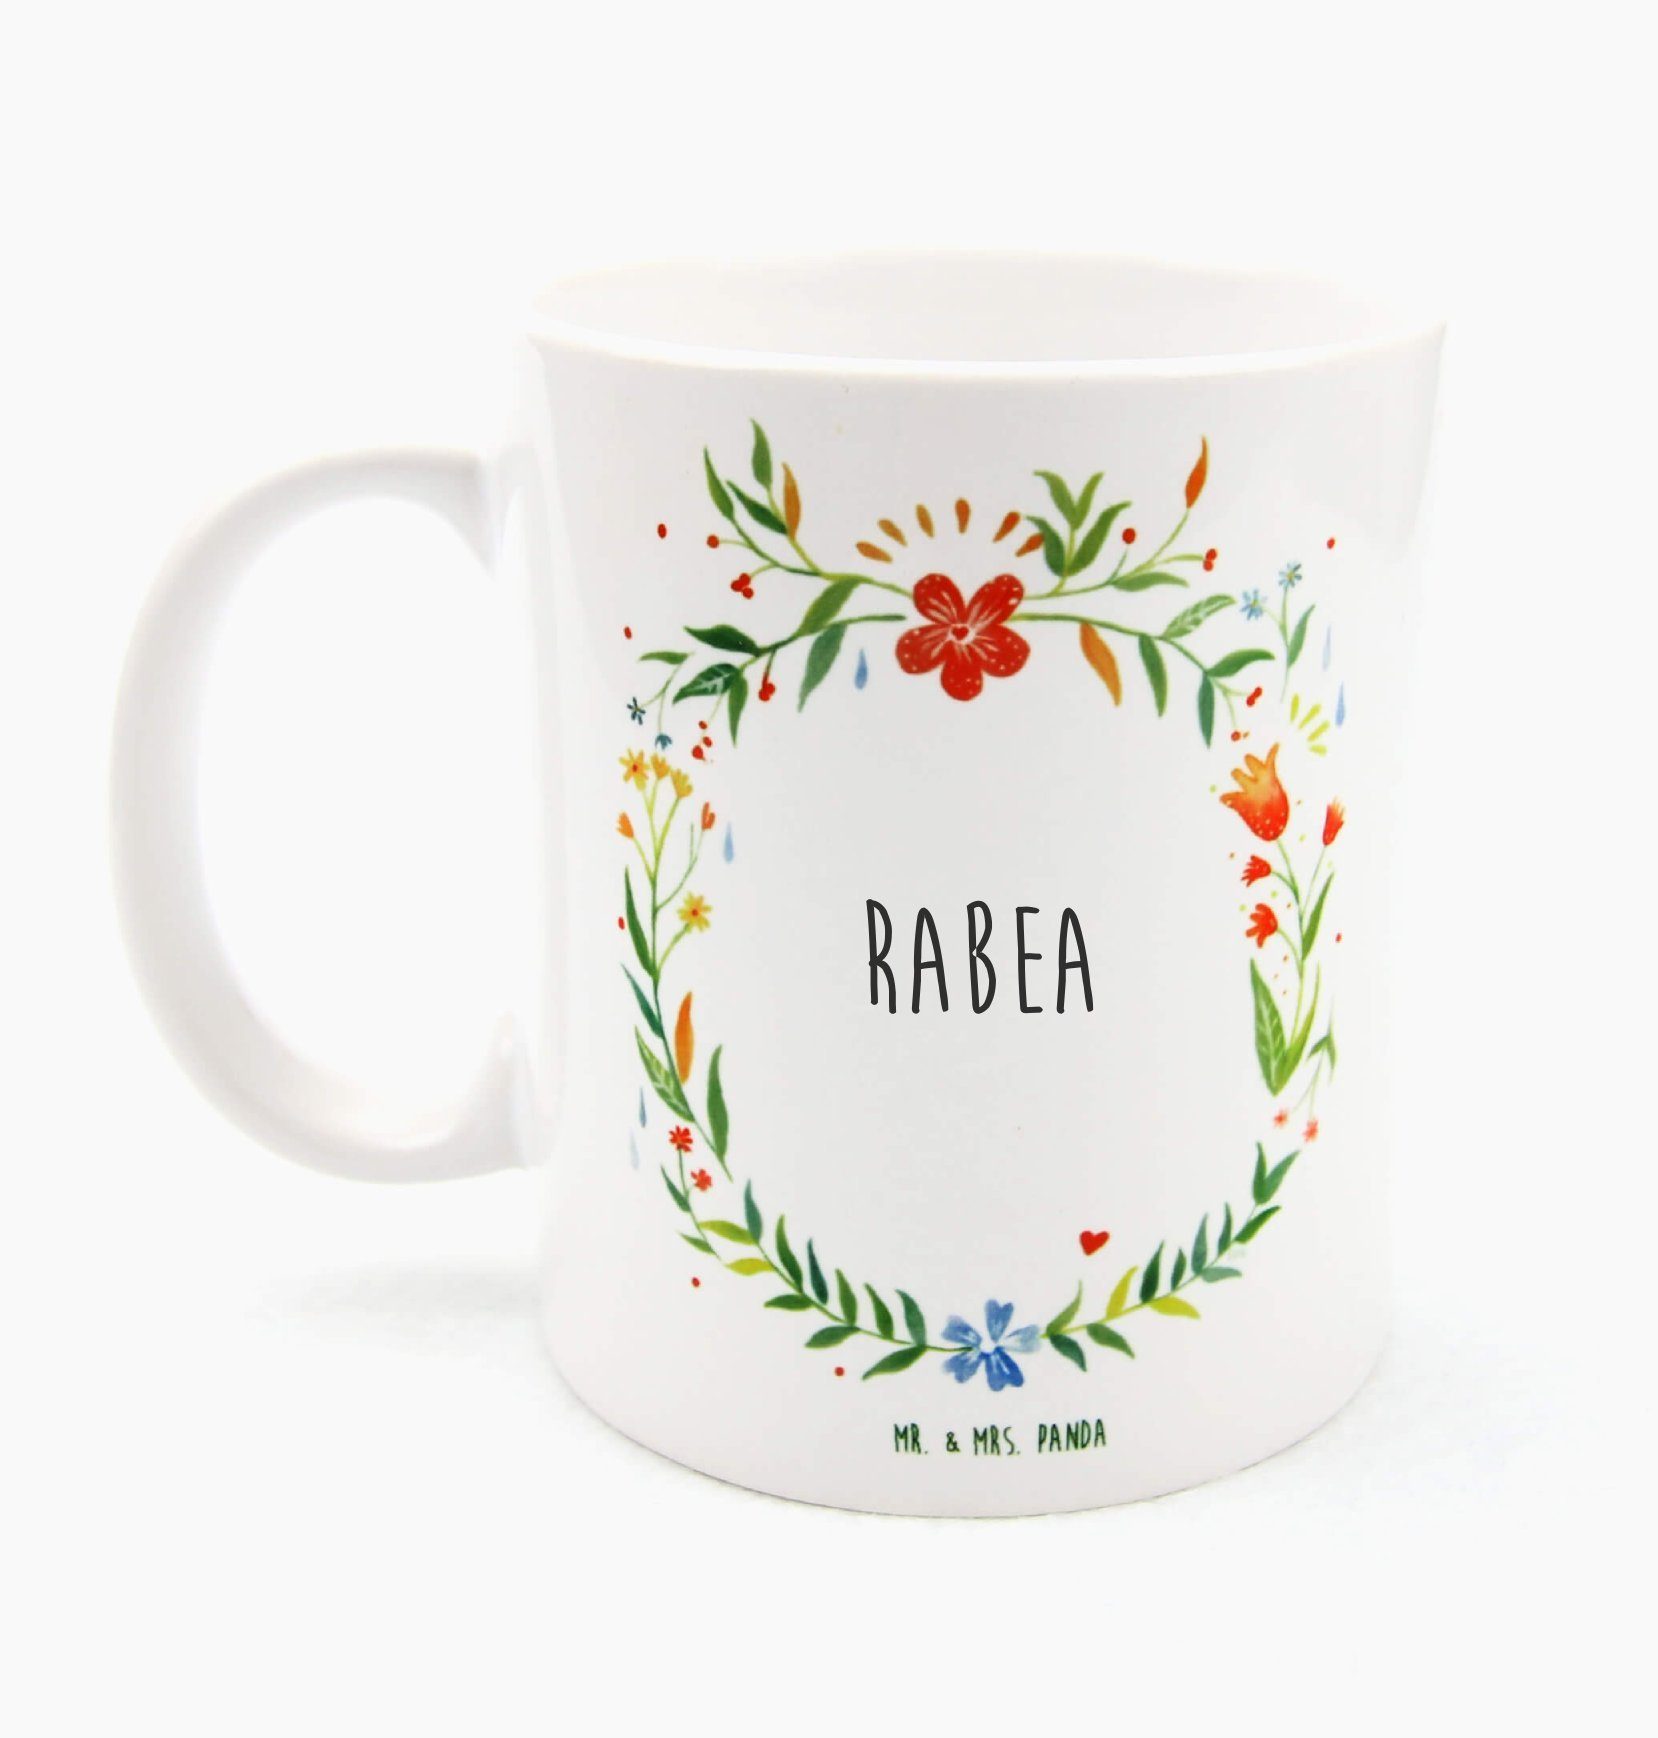 Mr. & Mrs. Panda Tasse Rabea - Geschenk, Kaffeebecher, Geschenk Tasse, Porzellantasse, Tasse, Keramik